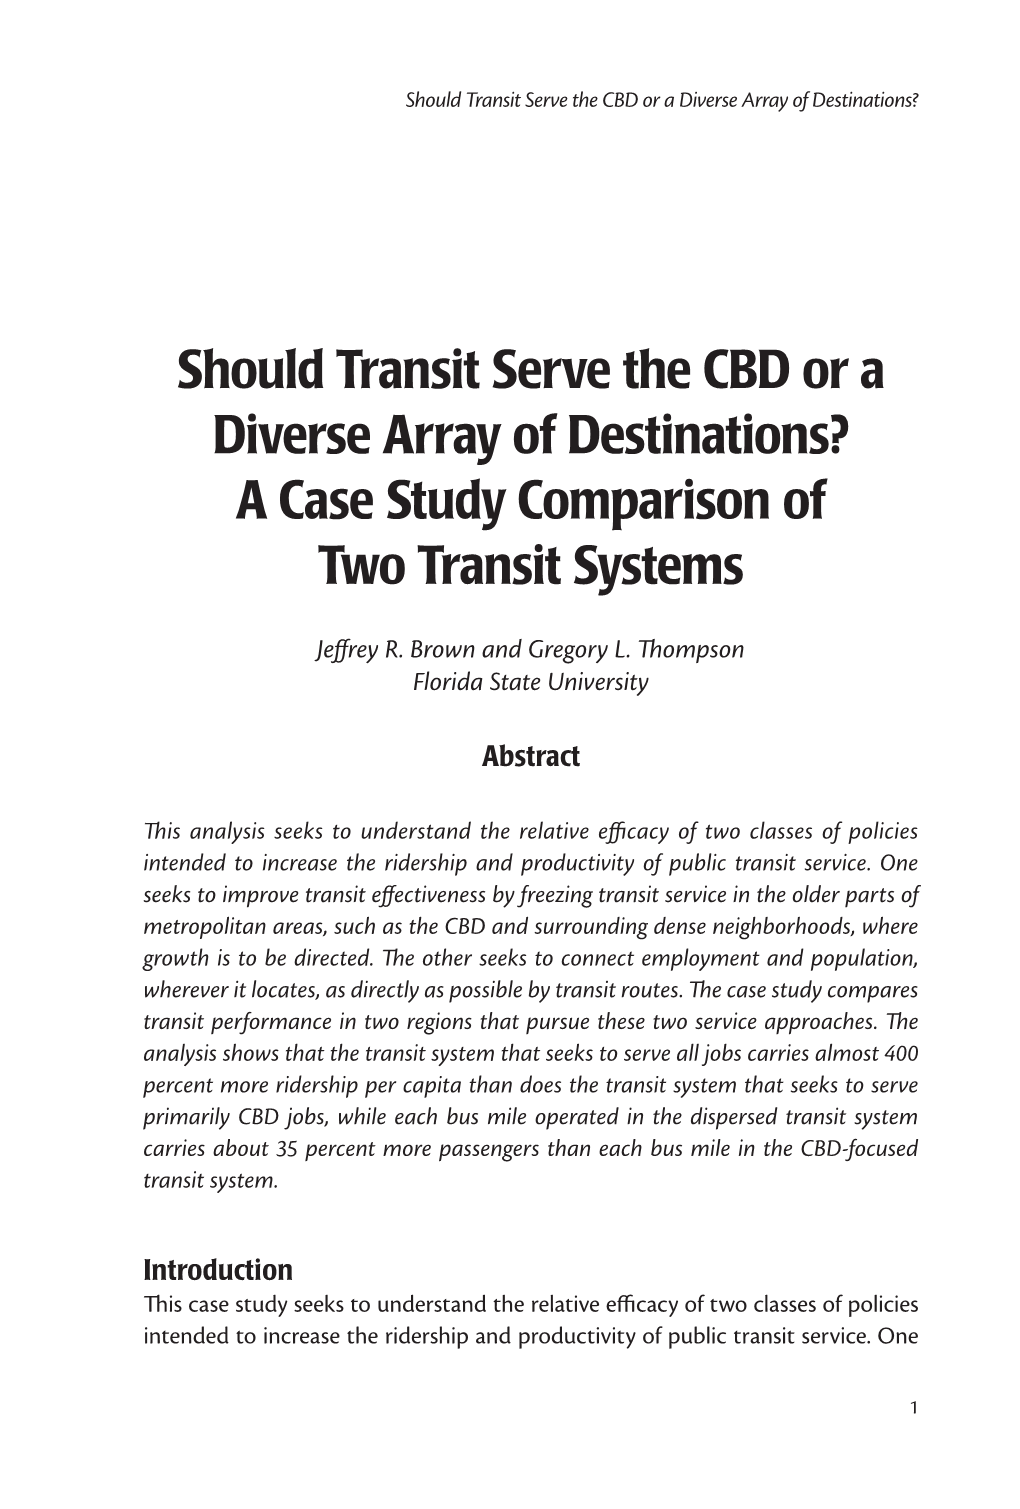 Should Transit Serve the CBD Or a Diverse Array of Destinations?